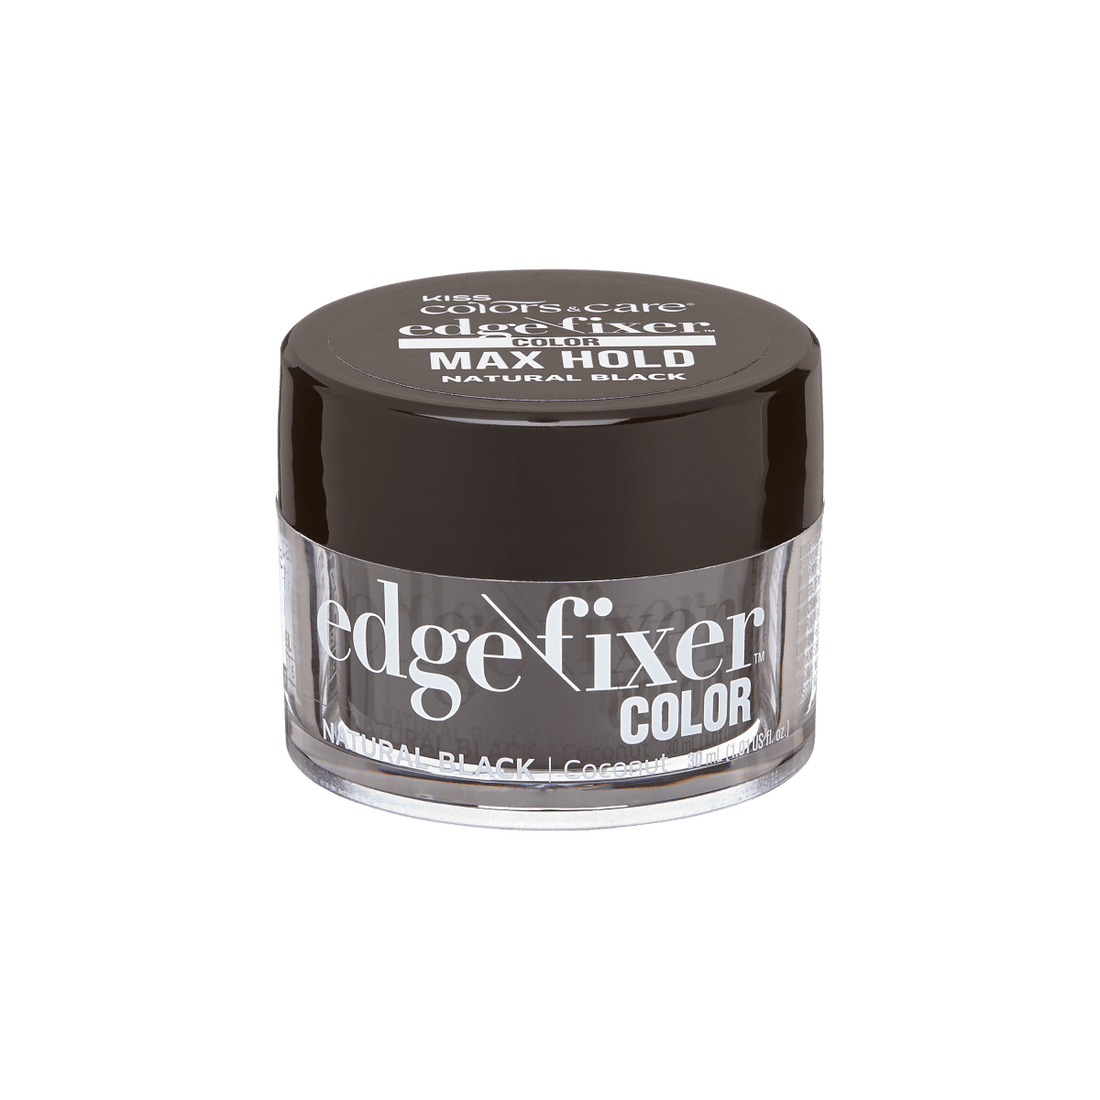 Edge Fixer Color 30ml - Natural Black